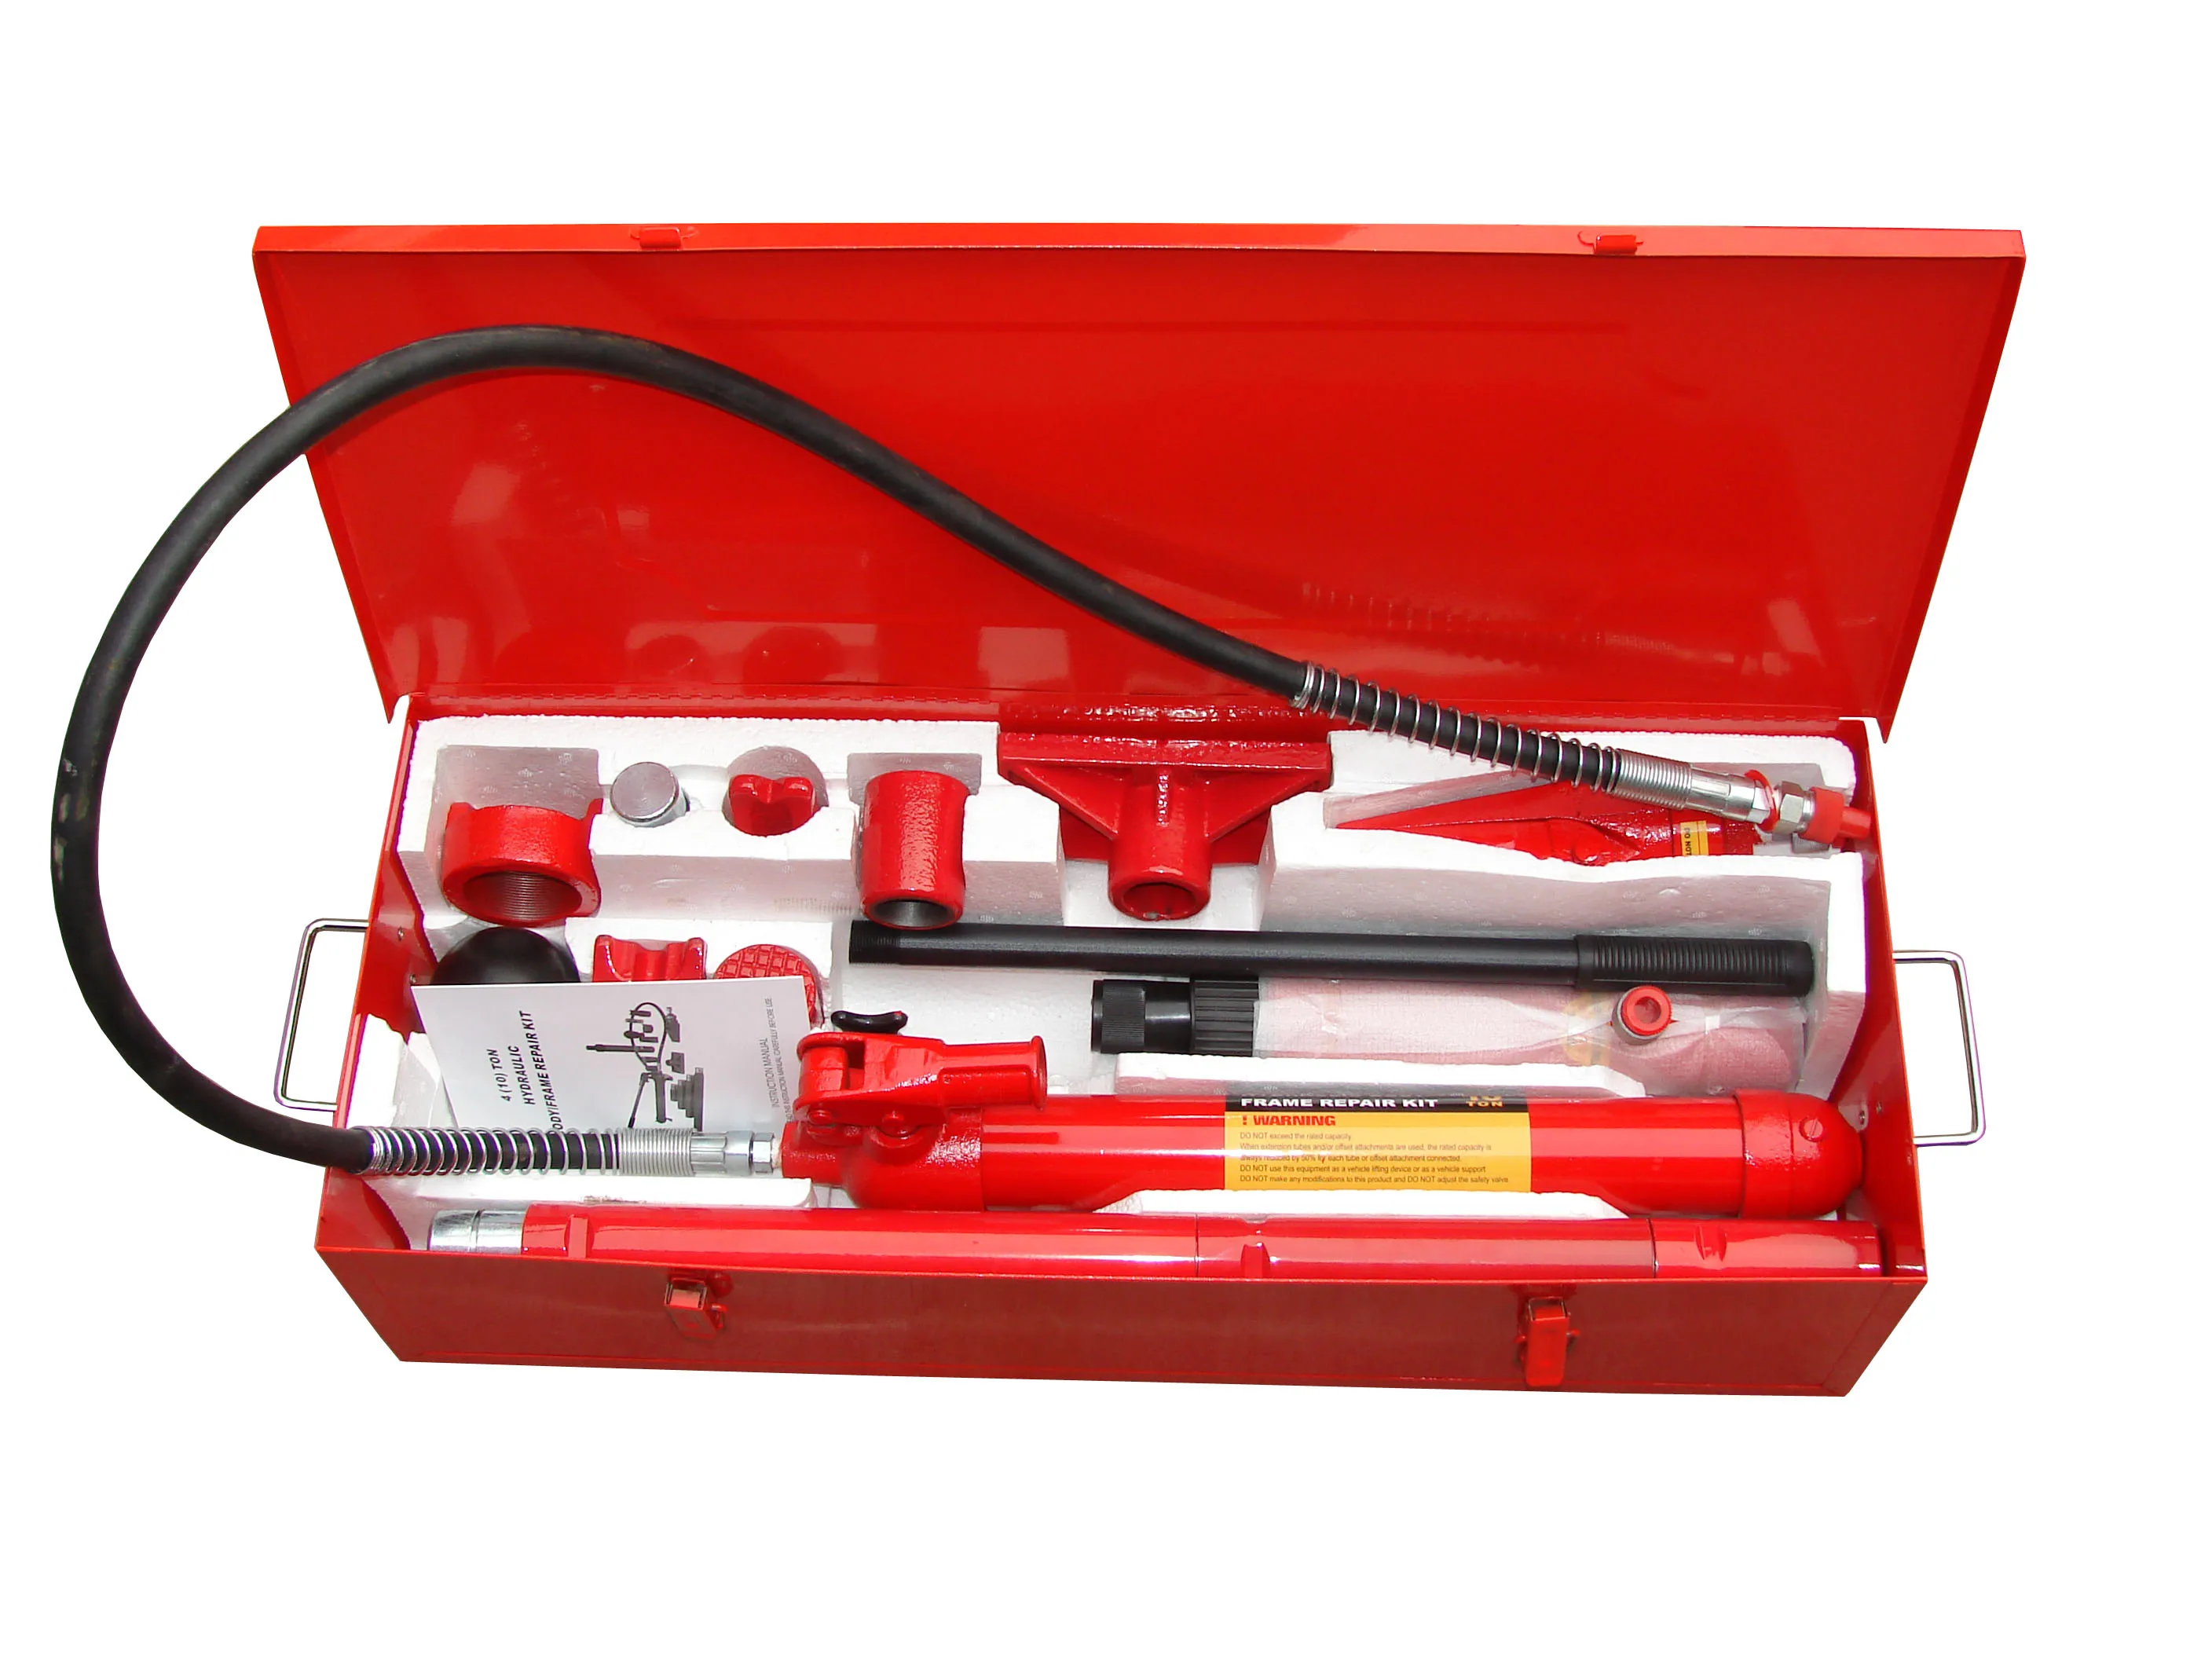 Hydraulic Body Fram Repair Kit Car Body Repair Tools Vehicle Equipment